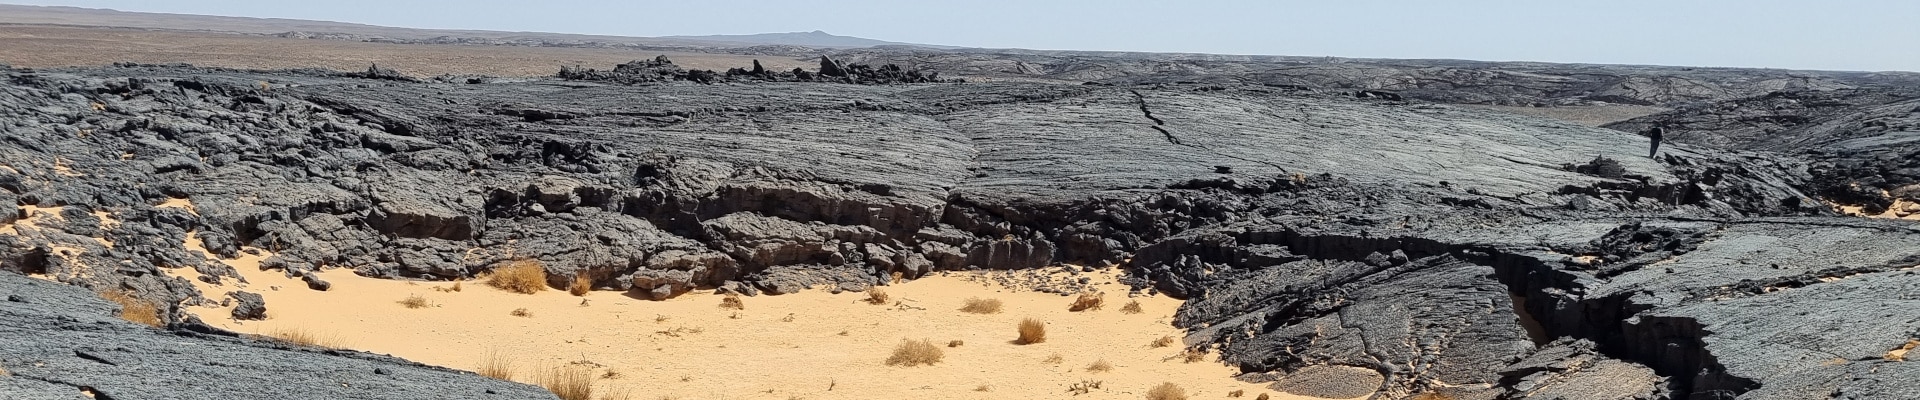 Photo of geological formations in the Wadi Tajnet, Libya.